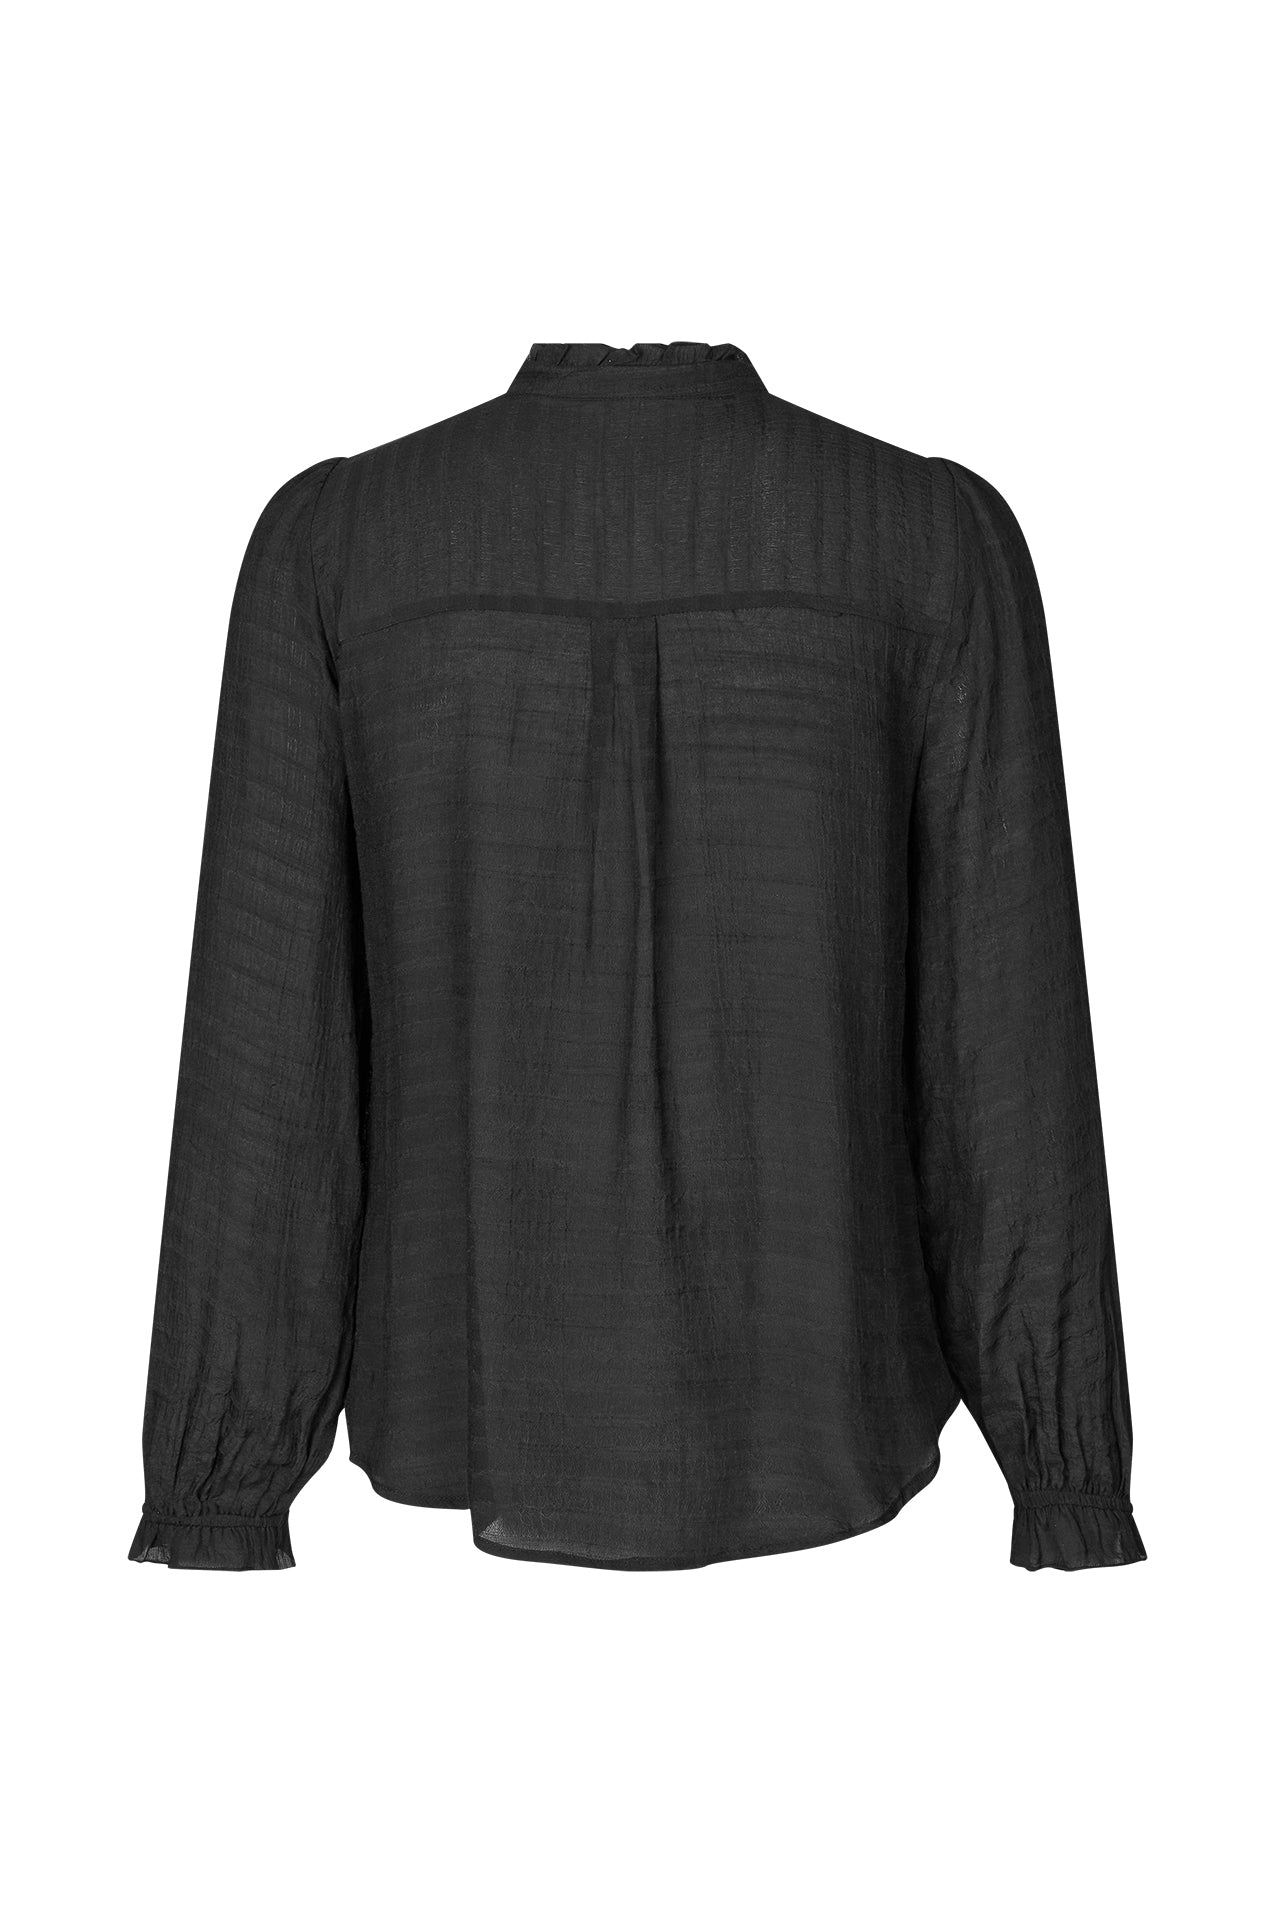 Lollys Laundry ArielLL Shirt LS Shirt 99 Black